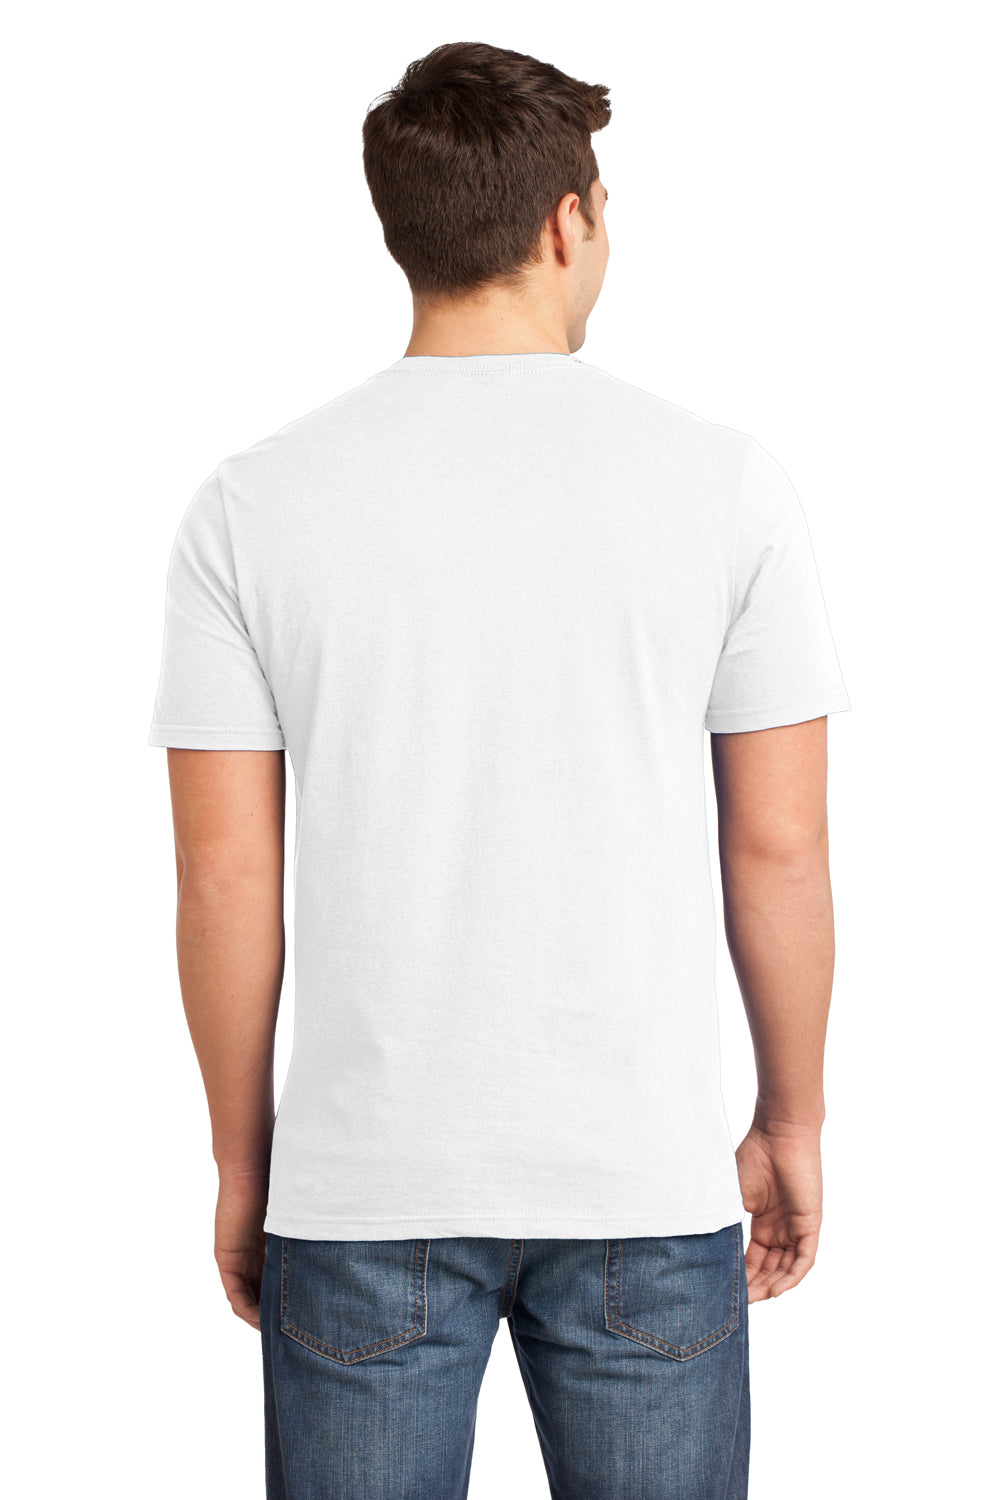 District DT6000 Mens Very Important Short Sleeve Crewneck T-Shirt White Back